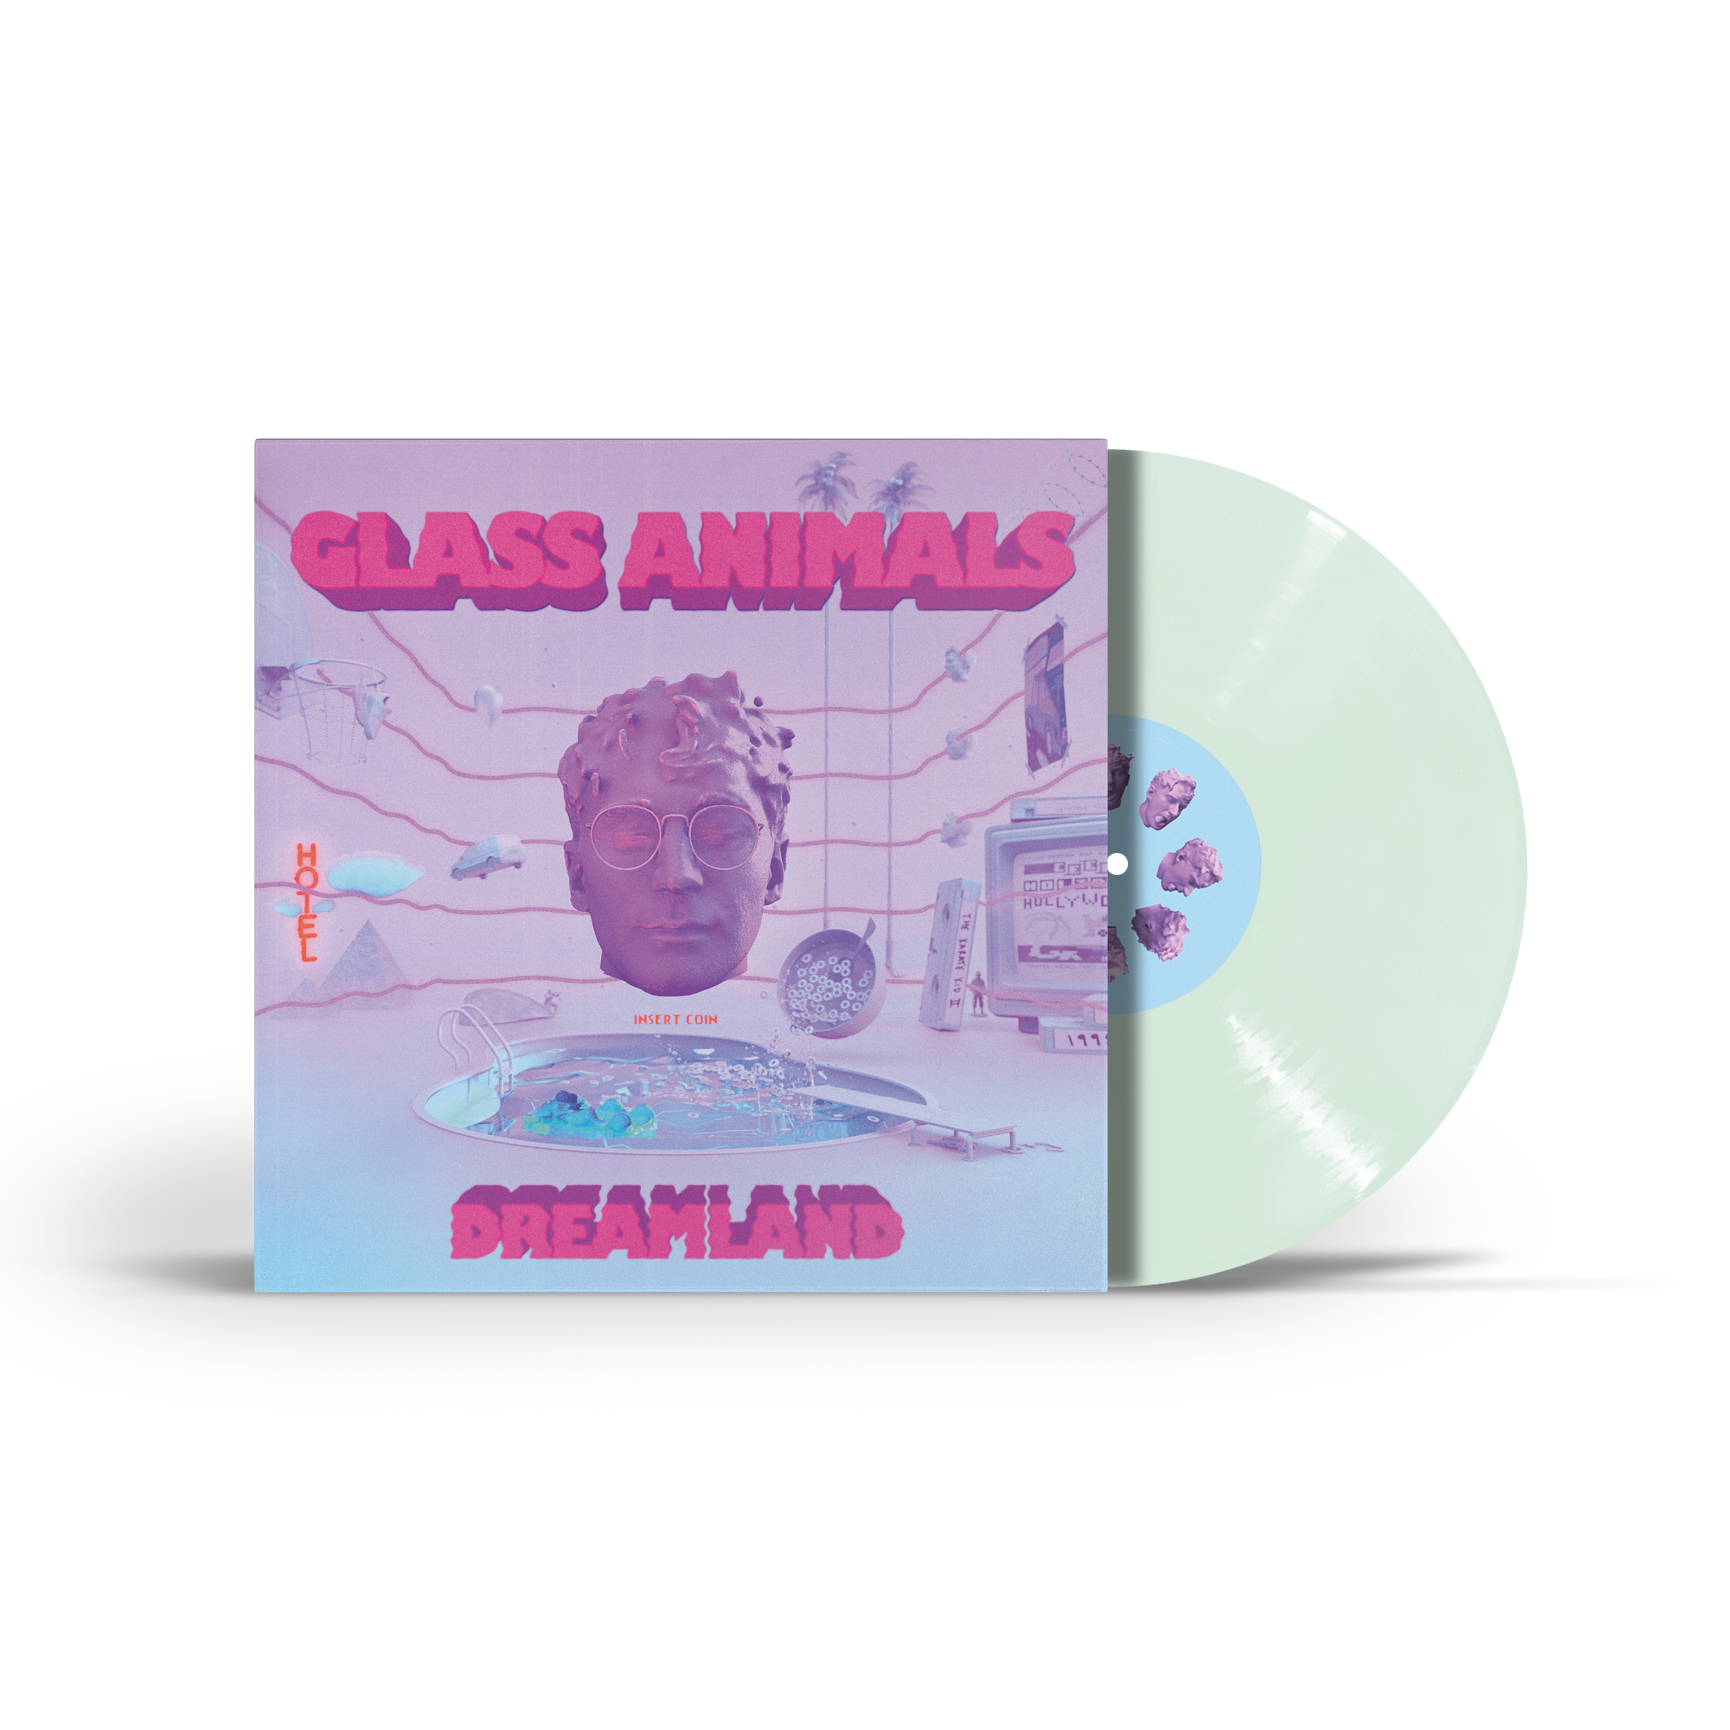 Glass Animals - Dreamland (Real Life Edition): 'Glow In The Dark' Vinyl LP